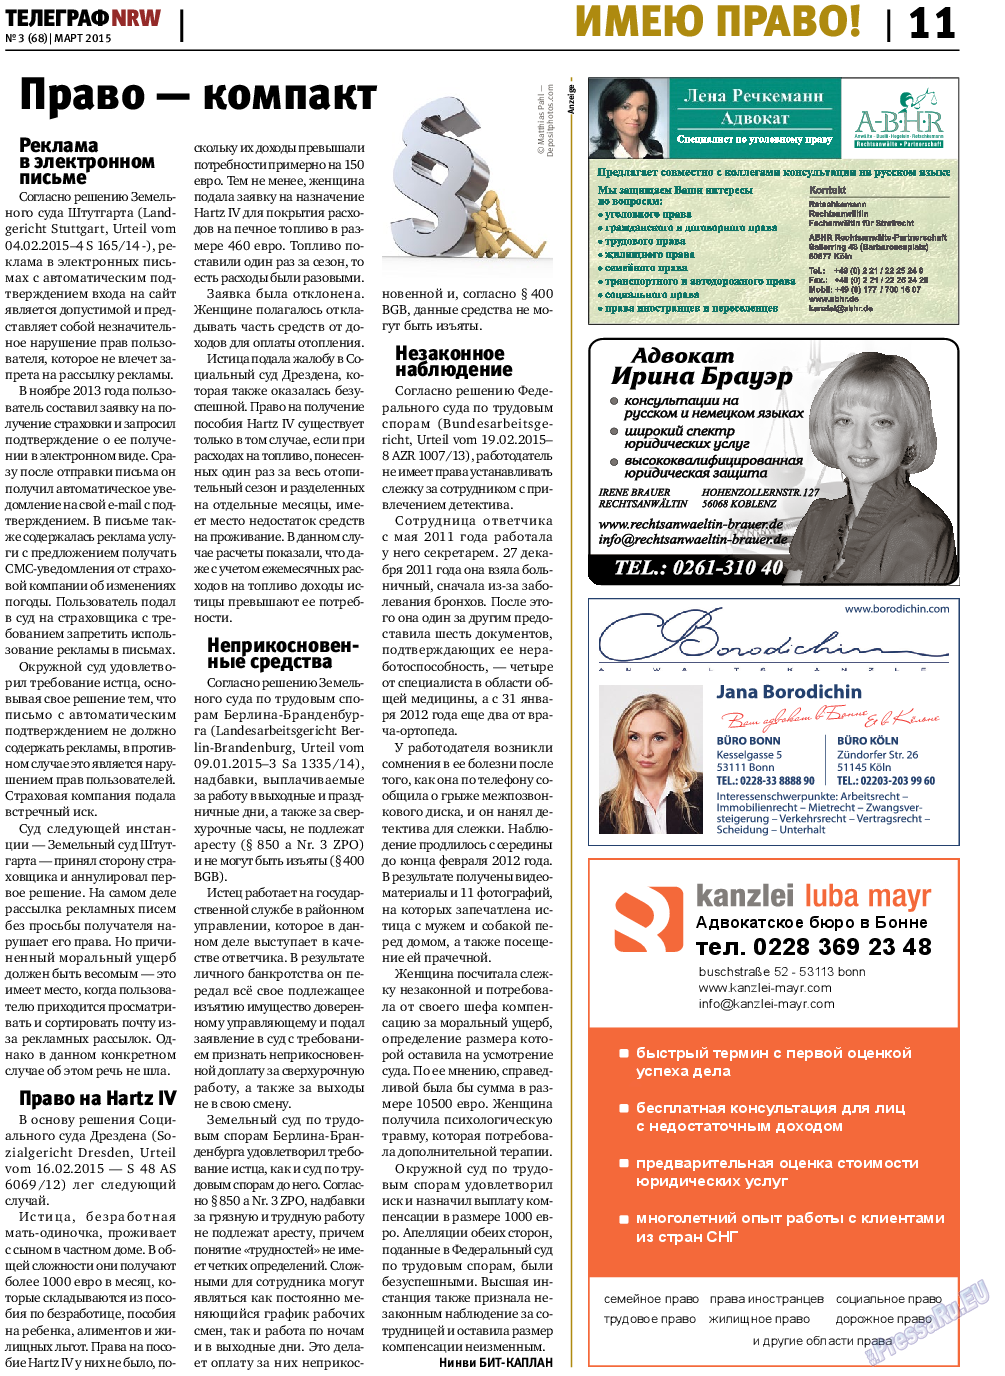 Телеграф NRW, газета. 2015 №3 стр.11